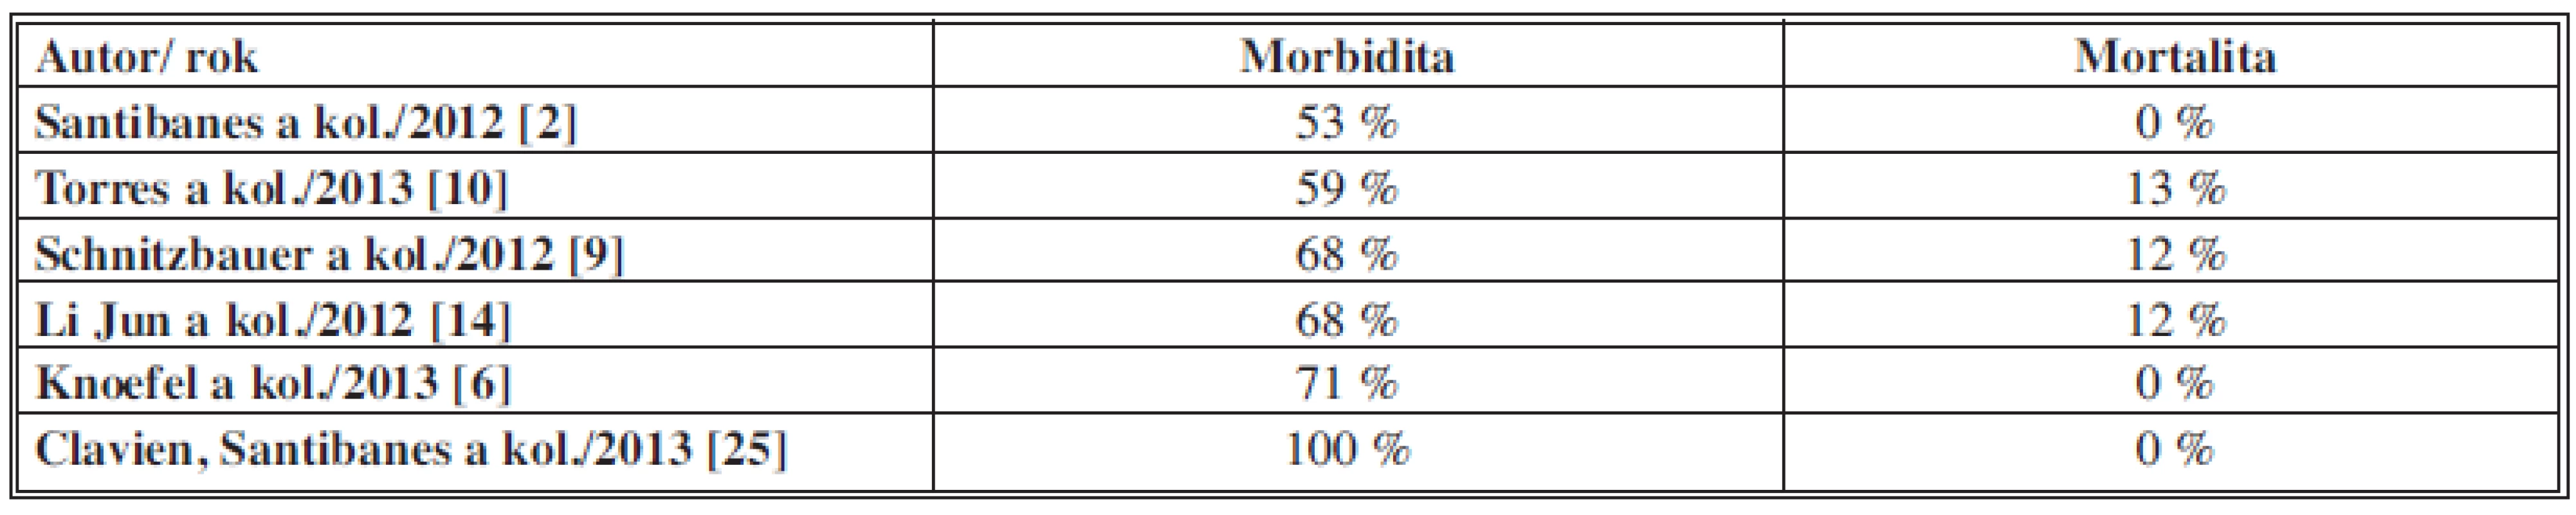 Morbidita, mortalita
Tab. 3: Morbidity, mortality